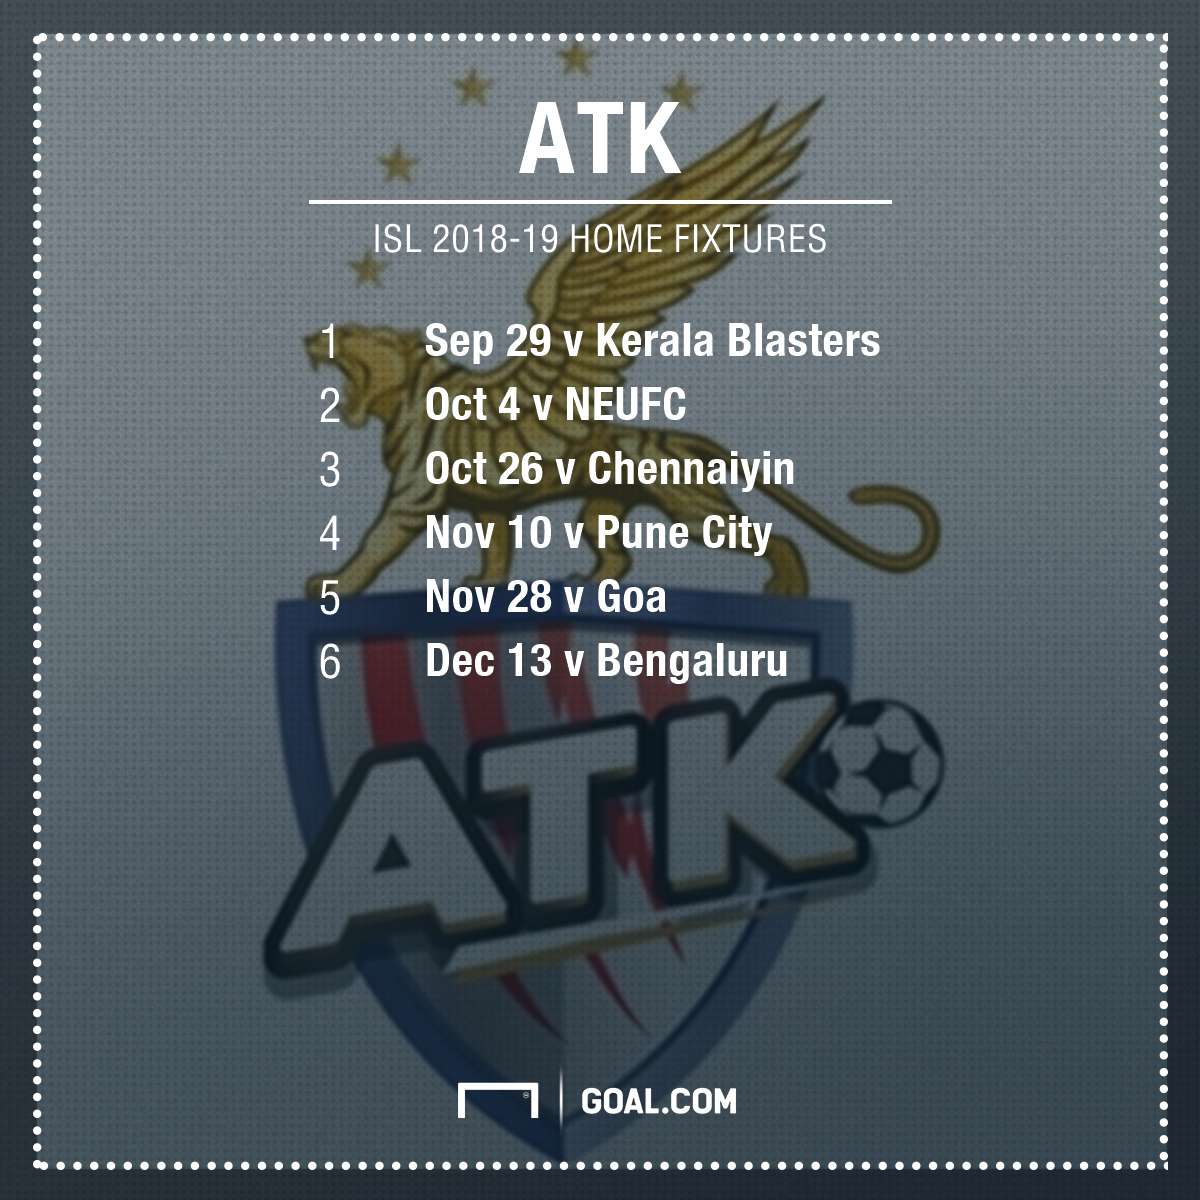 ATK home fixtures